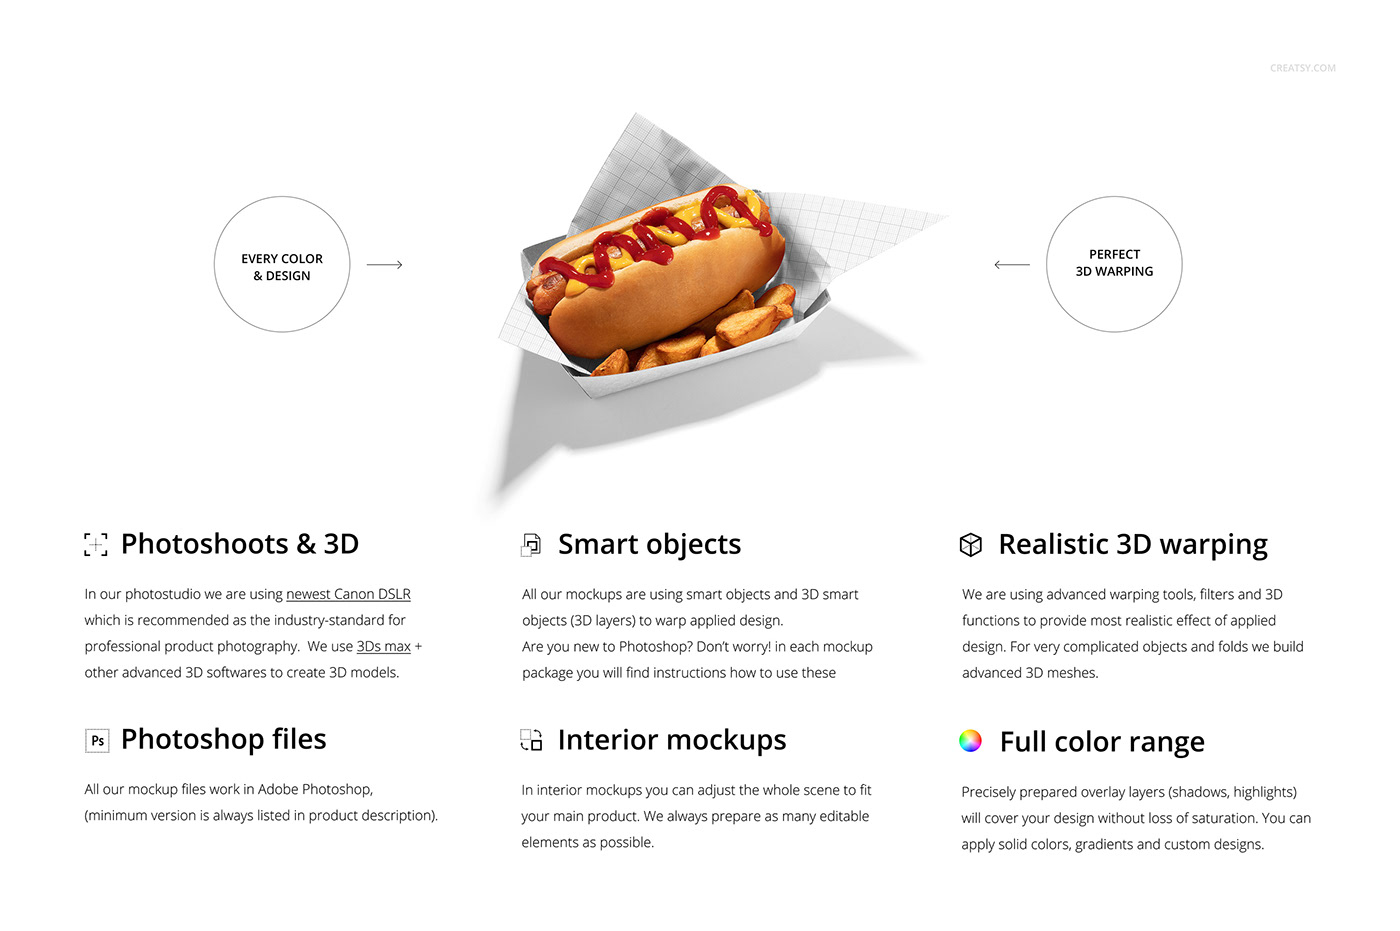 creatsy Food  hotdog mock-up Mockup mockups paper restaurant template wrapping